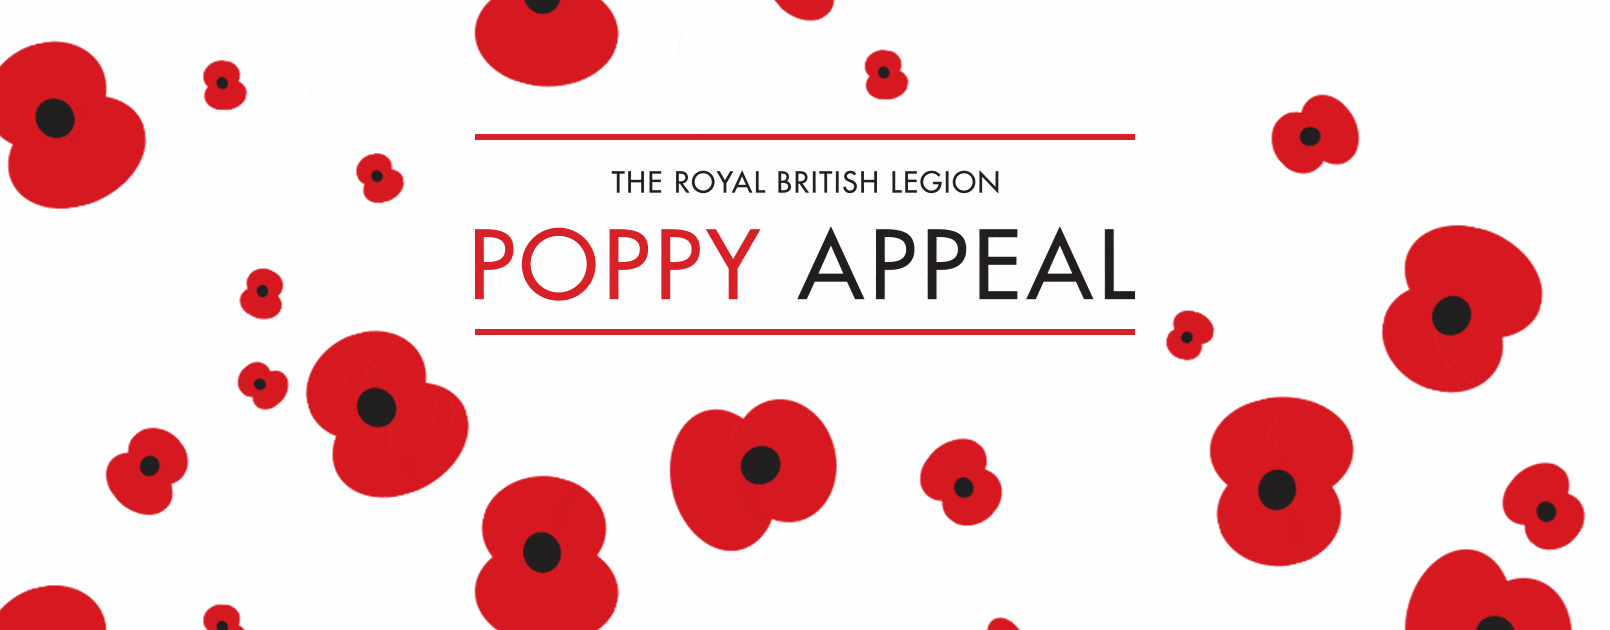 Poppy Company Logo - Poppy Appeal 2018 | The Royal British Legion